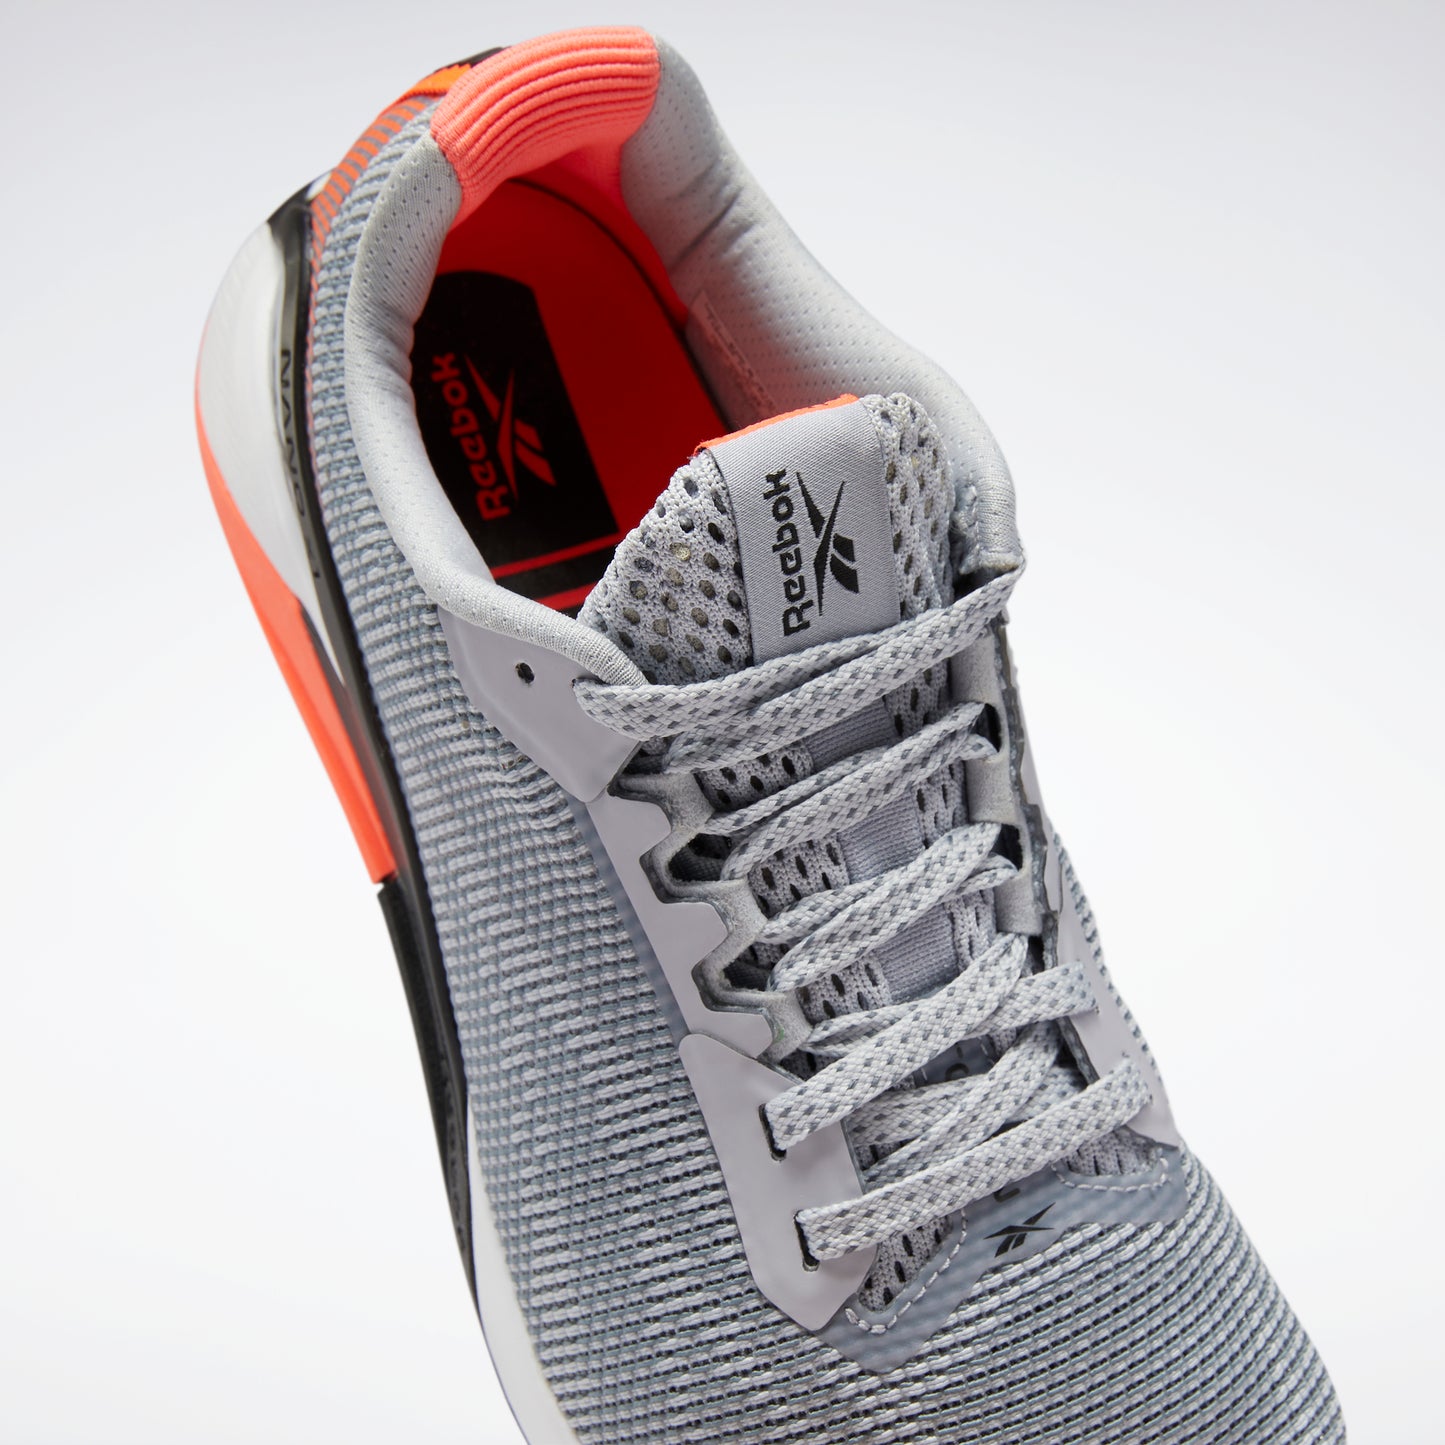 Reebok Footwear Women Nano X1 Grit Shoes Cdgry2/Cblack/Ornflr